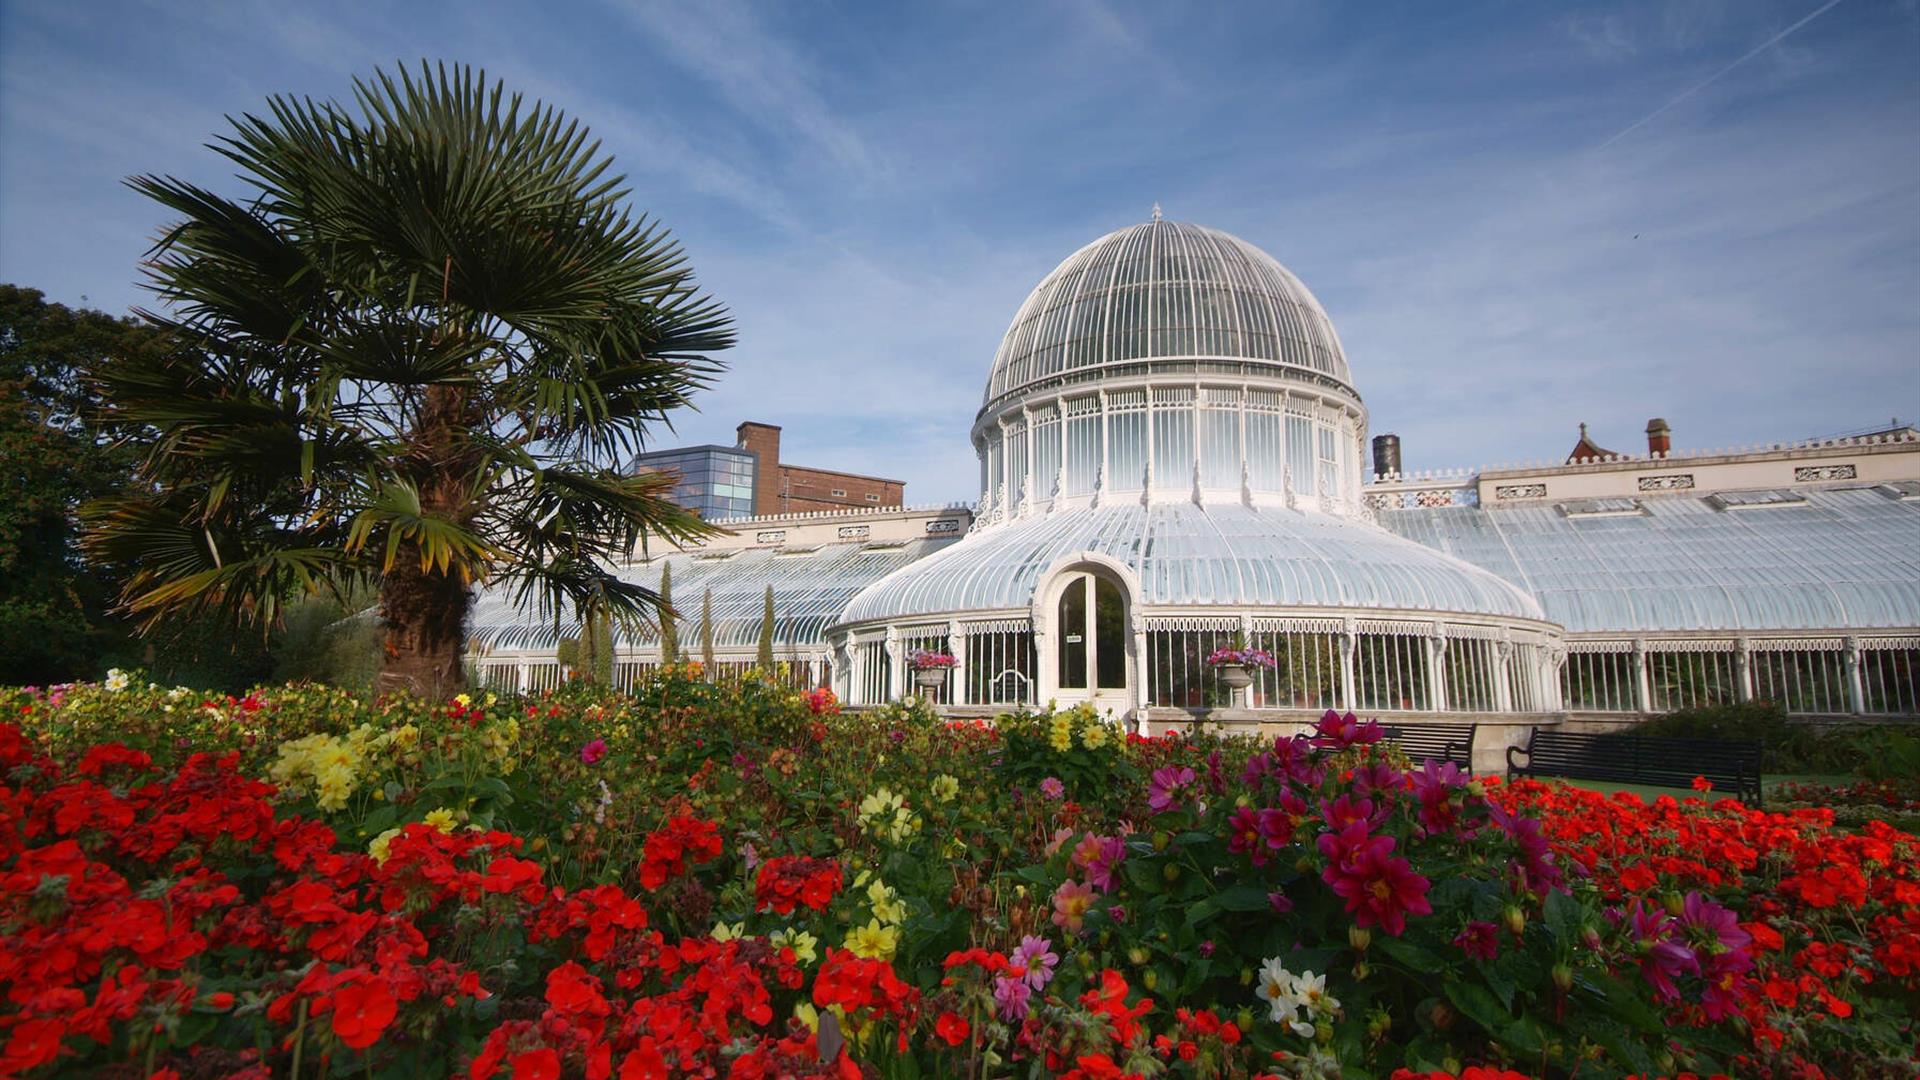 Belfast Botanic Gardens and Palm House